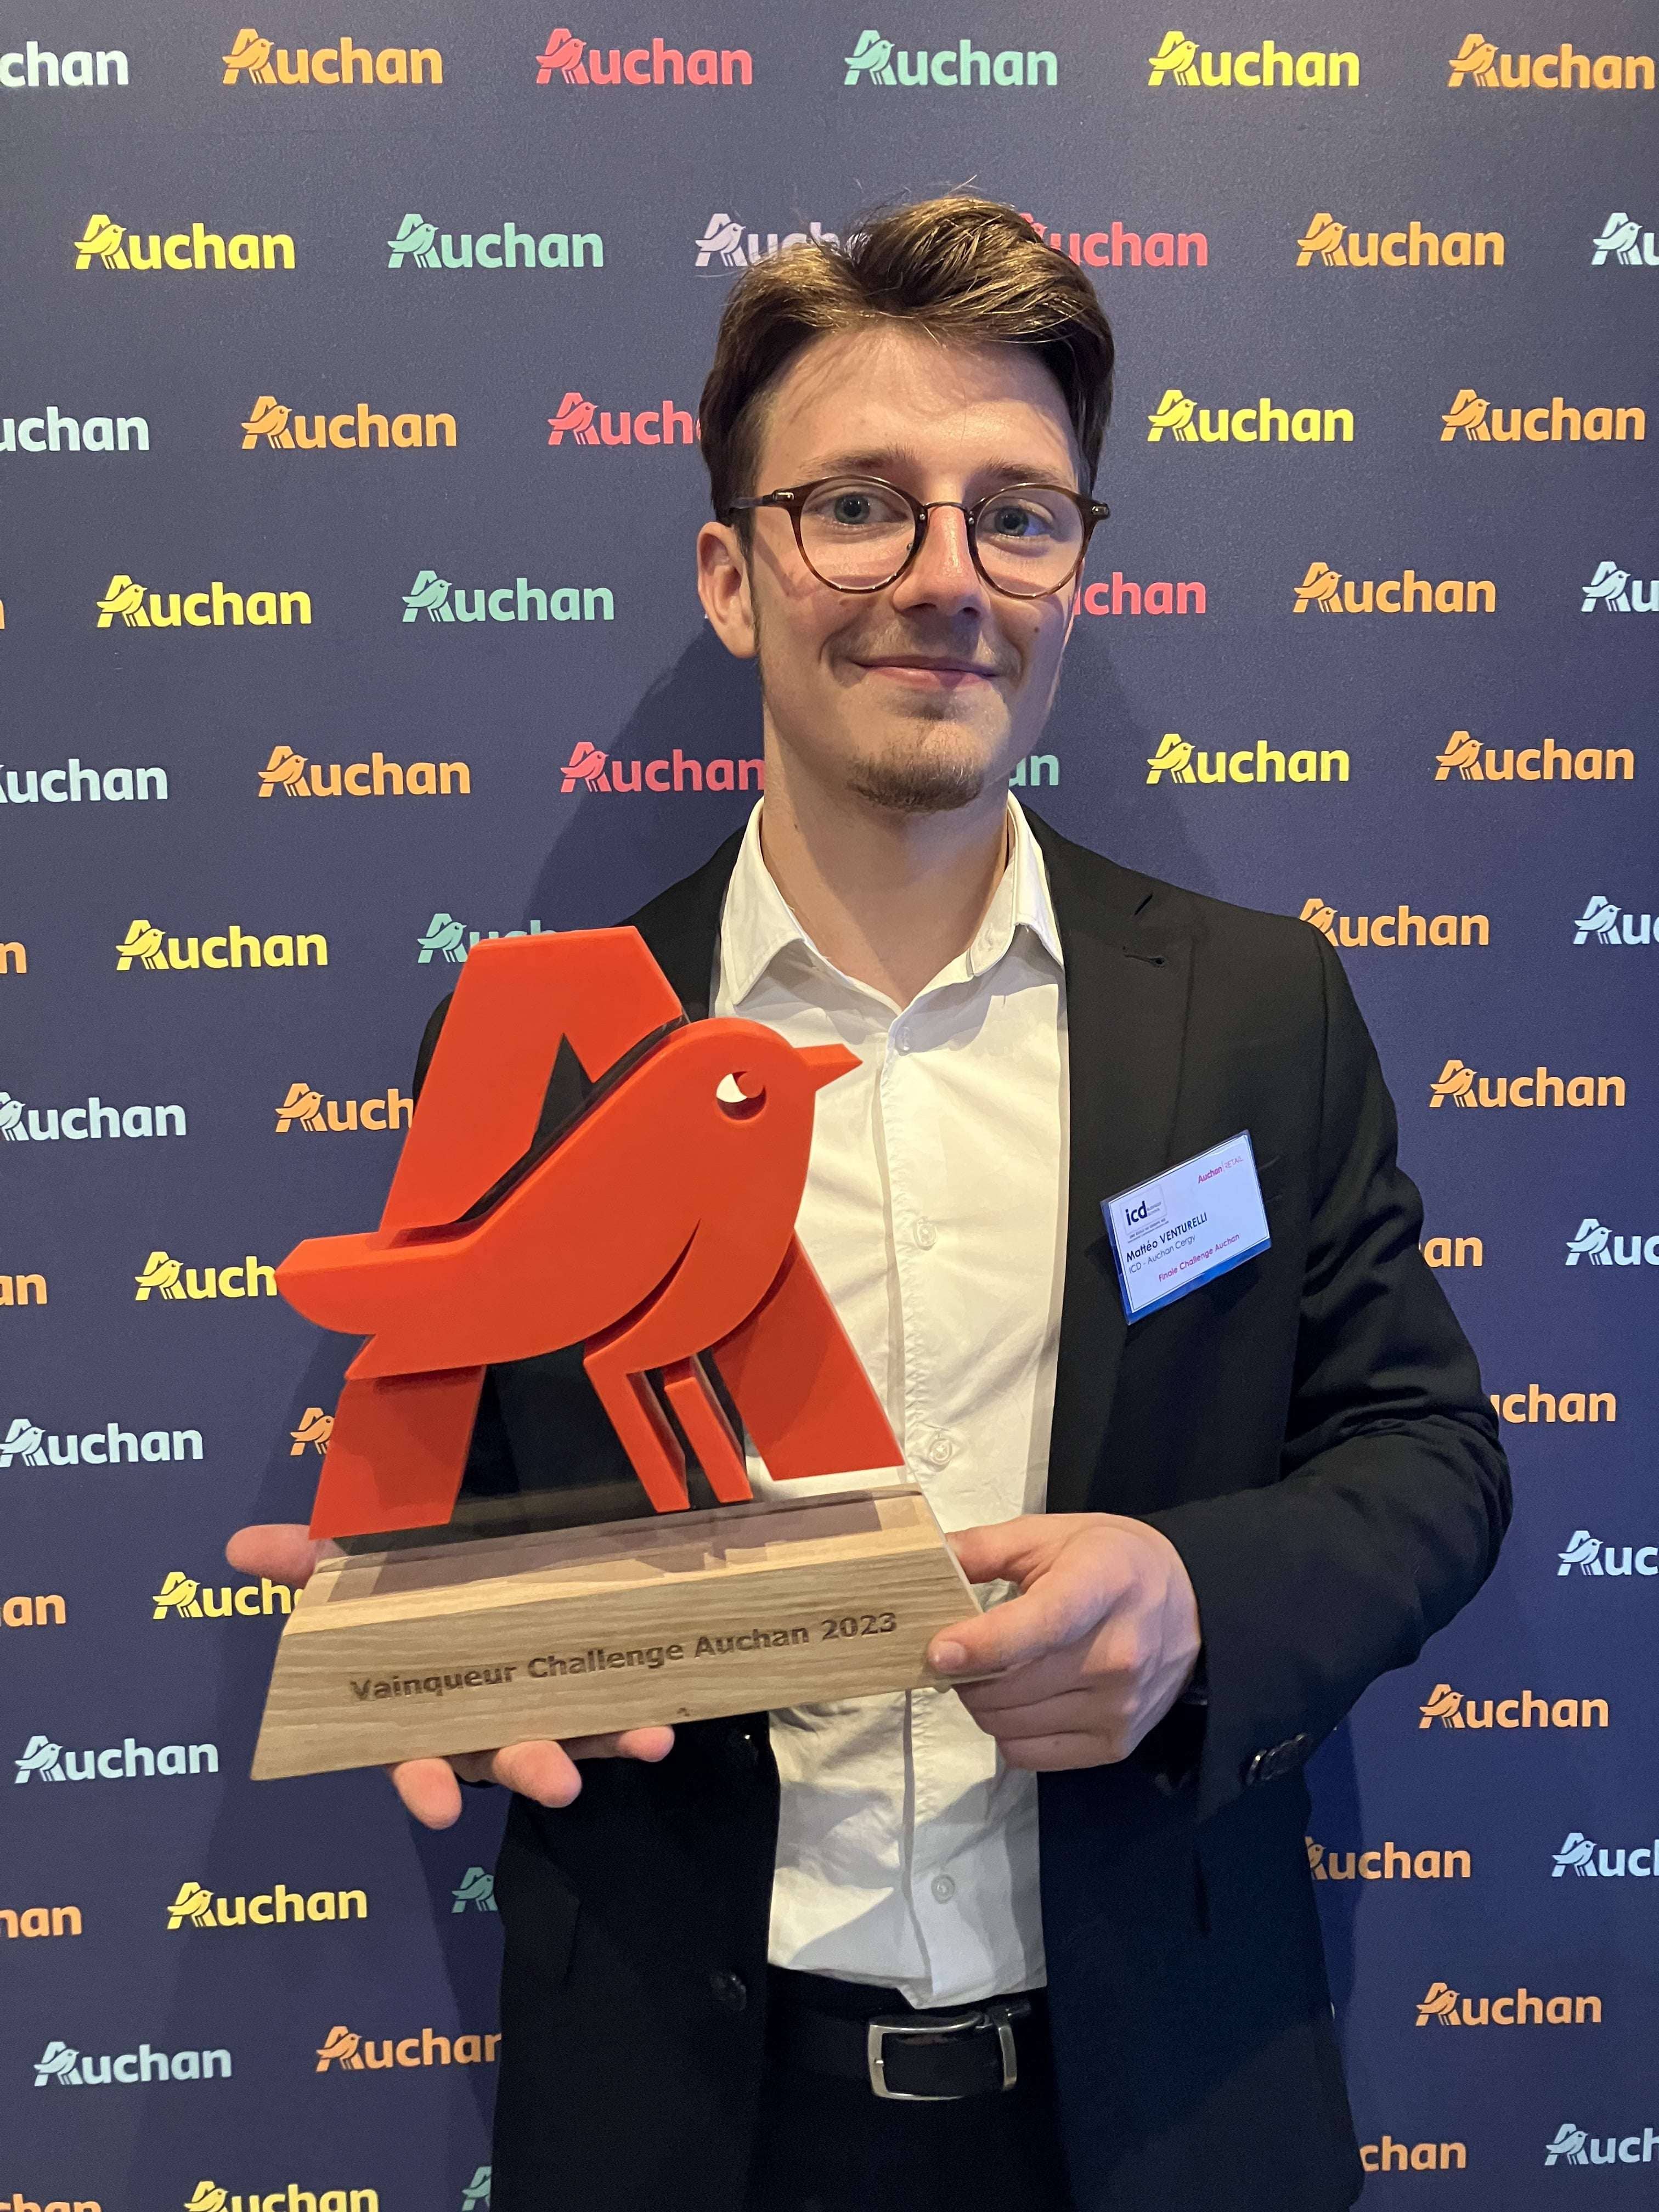 They did it! Matteo VENTURELLI with the Auchan Challenge trophy 